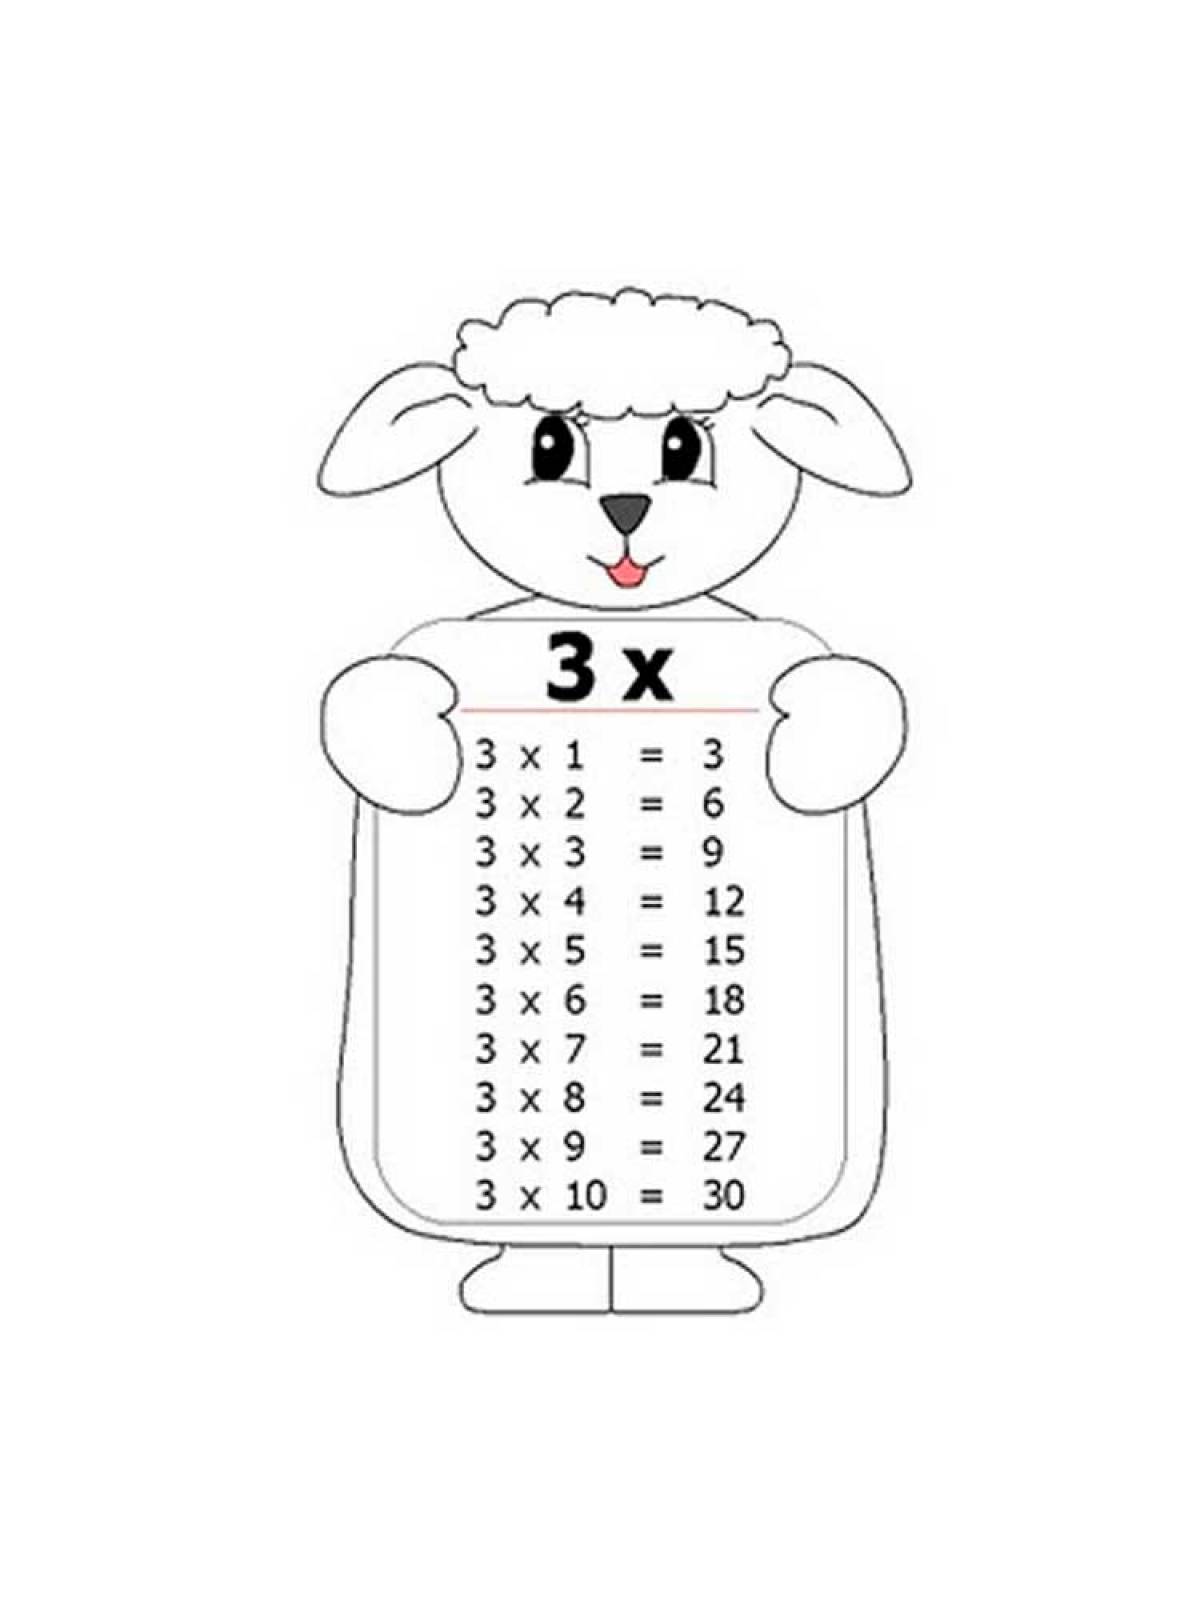 Multiplication table 14